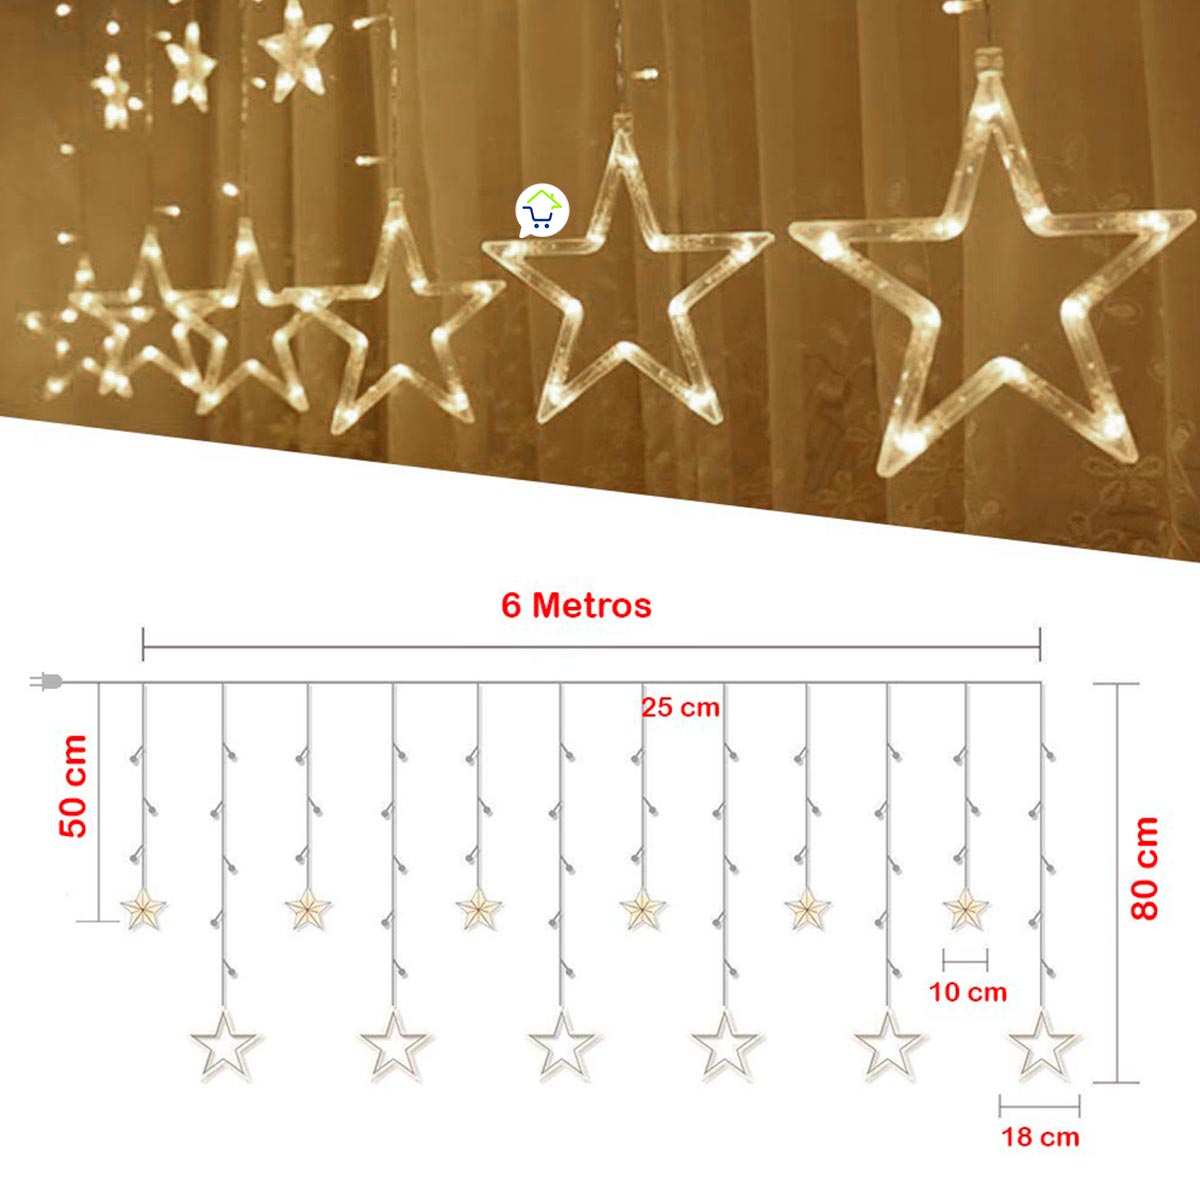 Extensión Luces Led Estrella X6 Metros Luz Navidad Cálida 2095